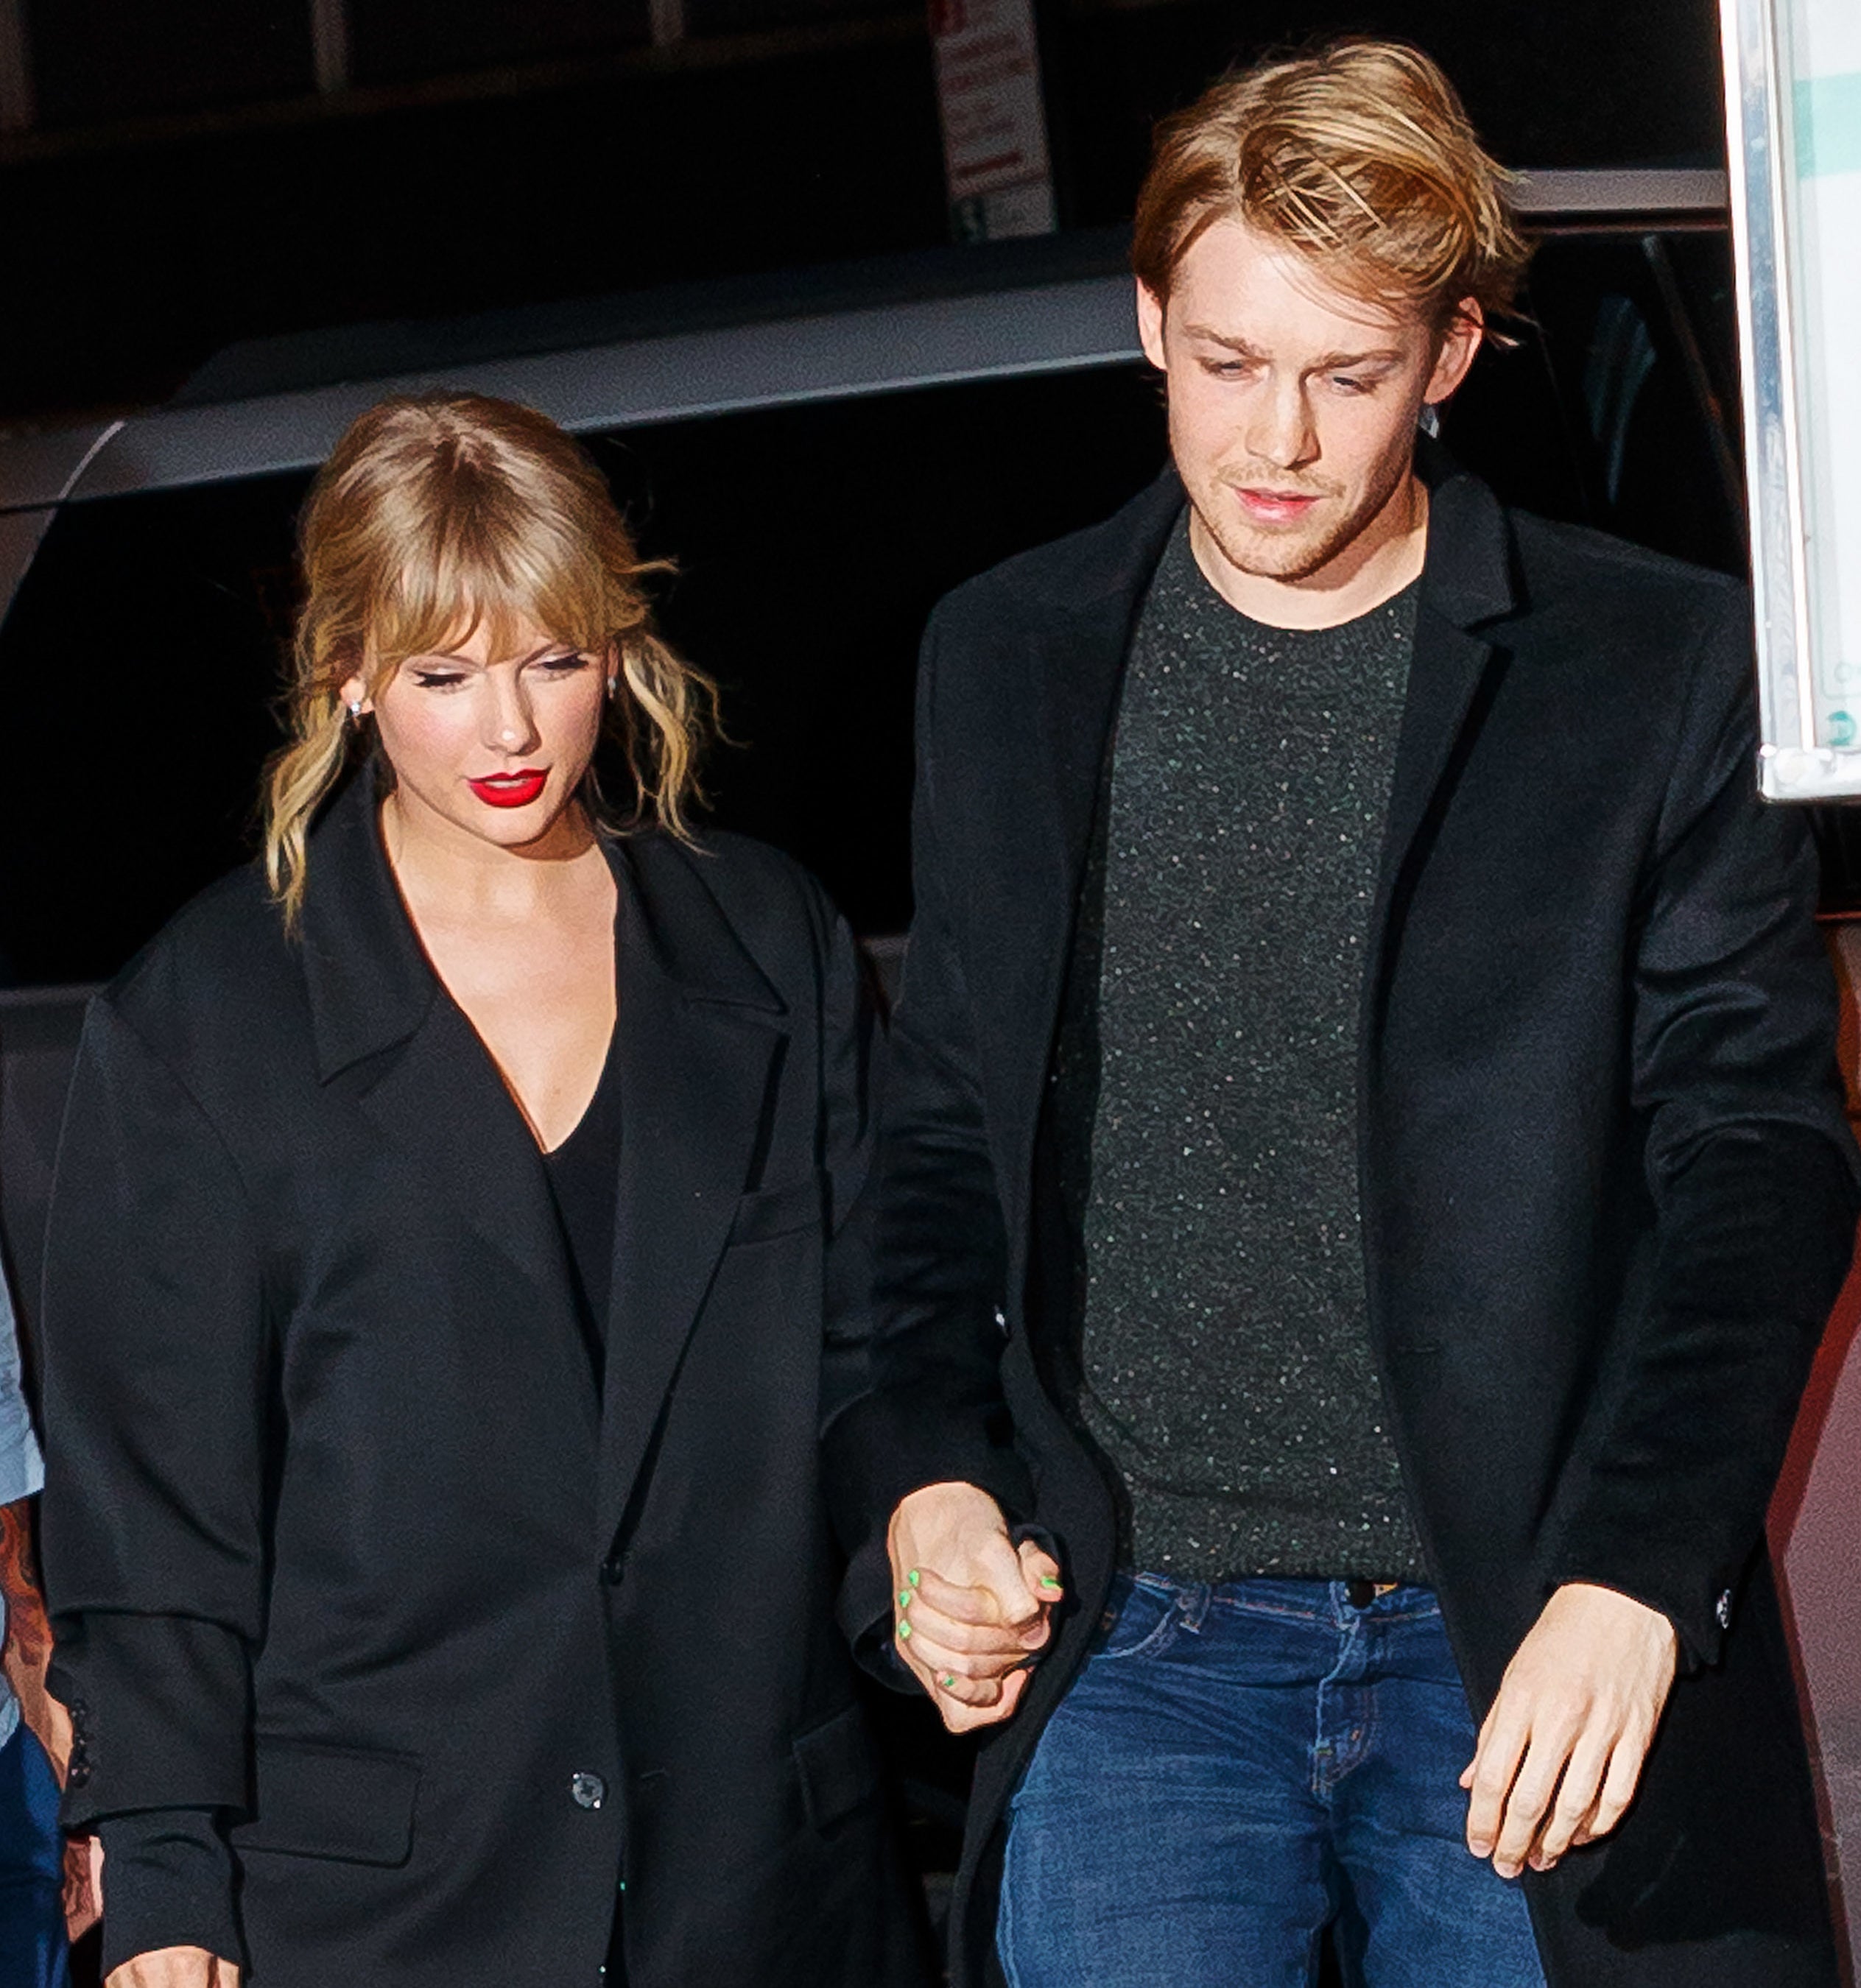 Taylor Swift with Joe Alwyn, both in stylish dark coats, walking and holding hands